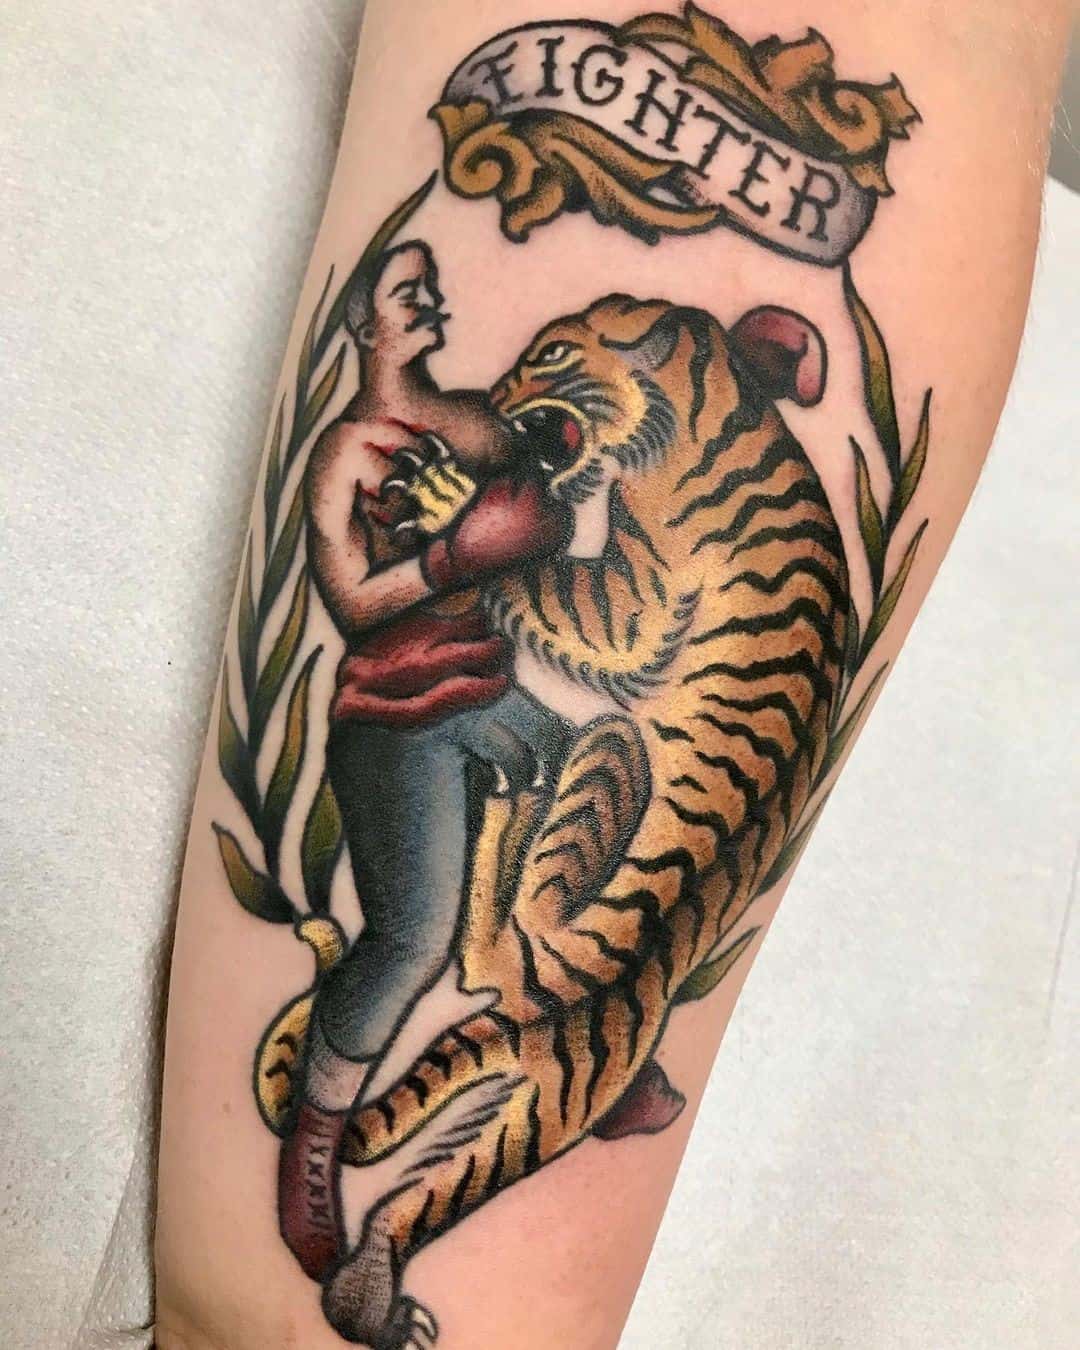 Idea inspirada en el luchador del tatuaje de la mano del tigre